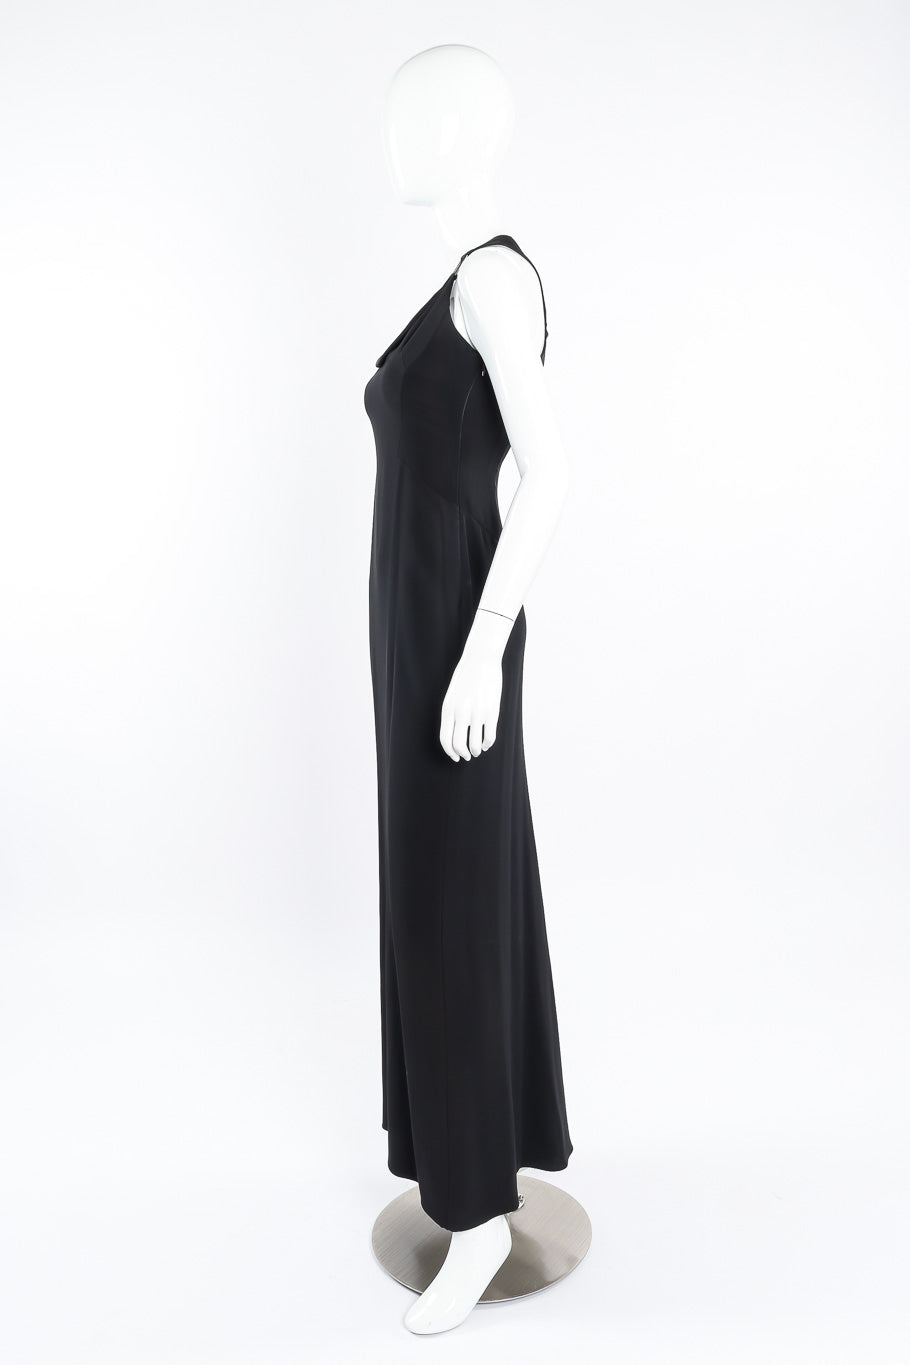 Valentino sleeveless maxi dress on mannequin @recessla